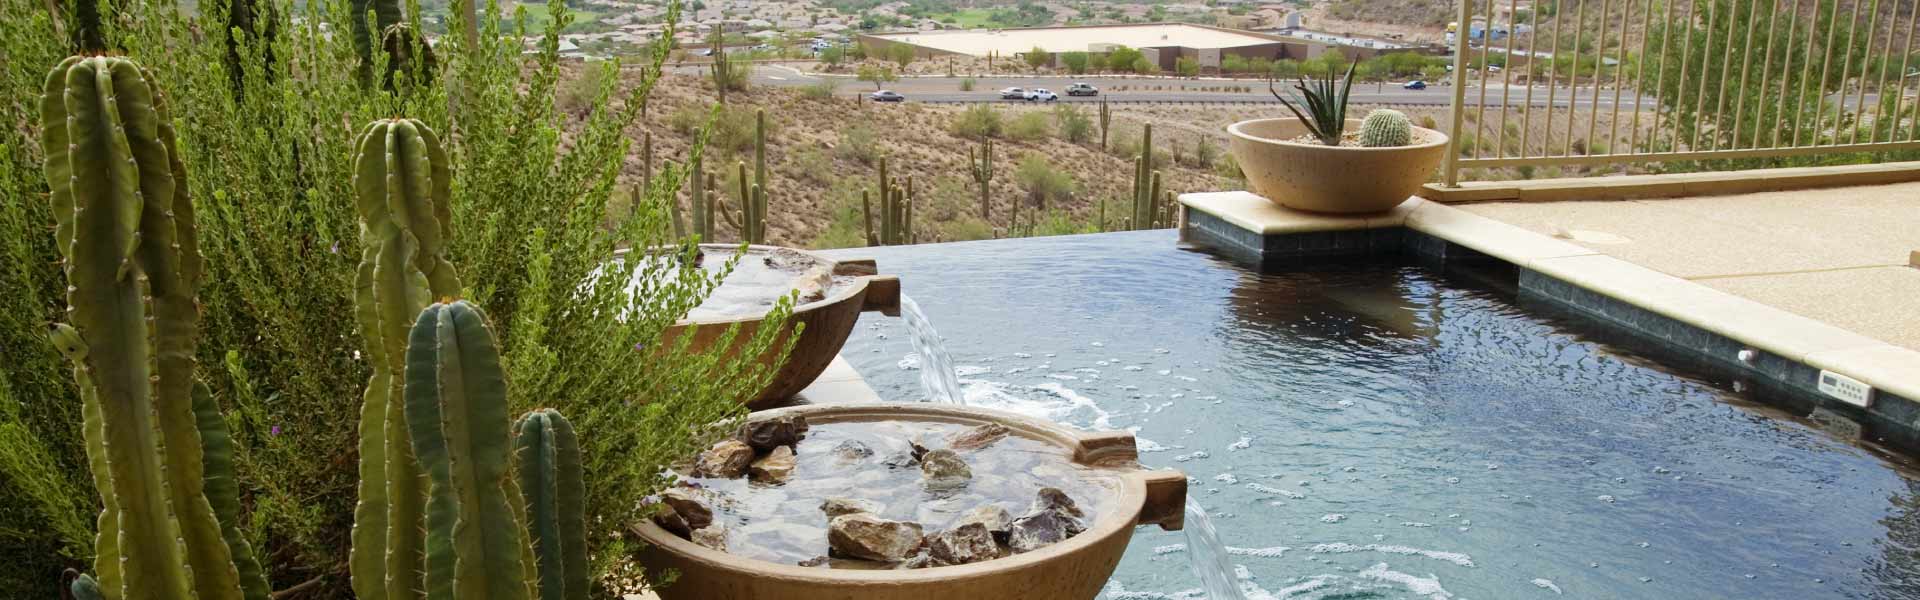 Clean pool in Arizona